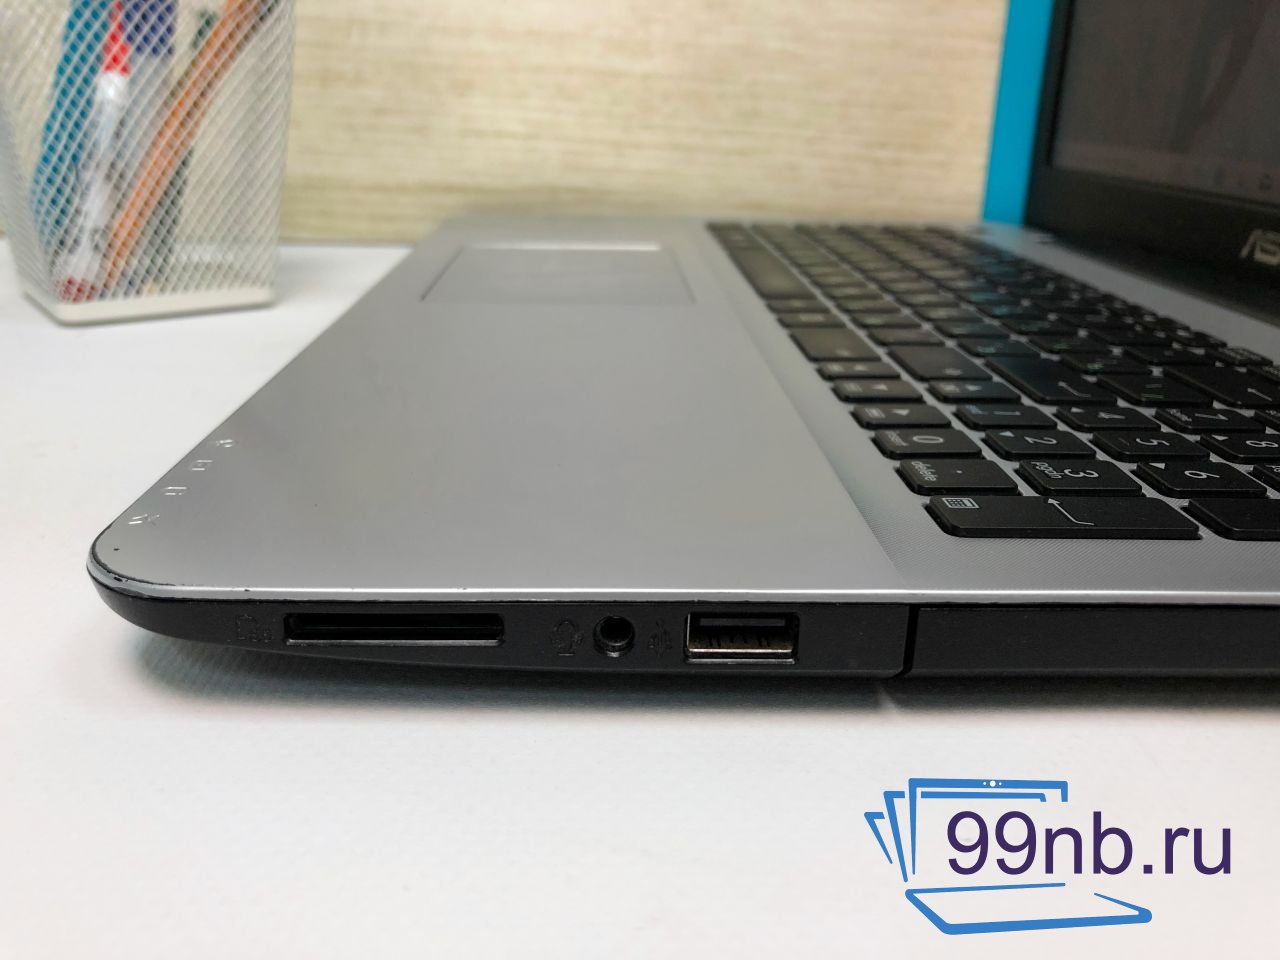  Ноутбук ASUS SSD